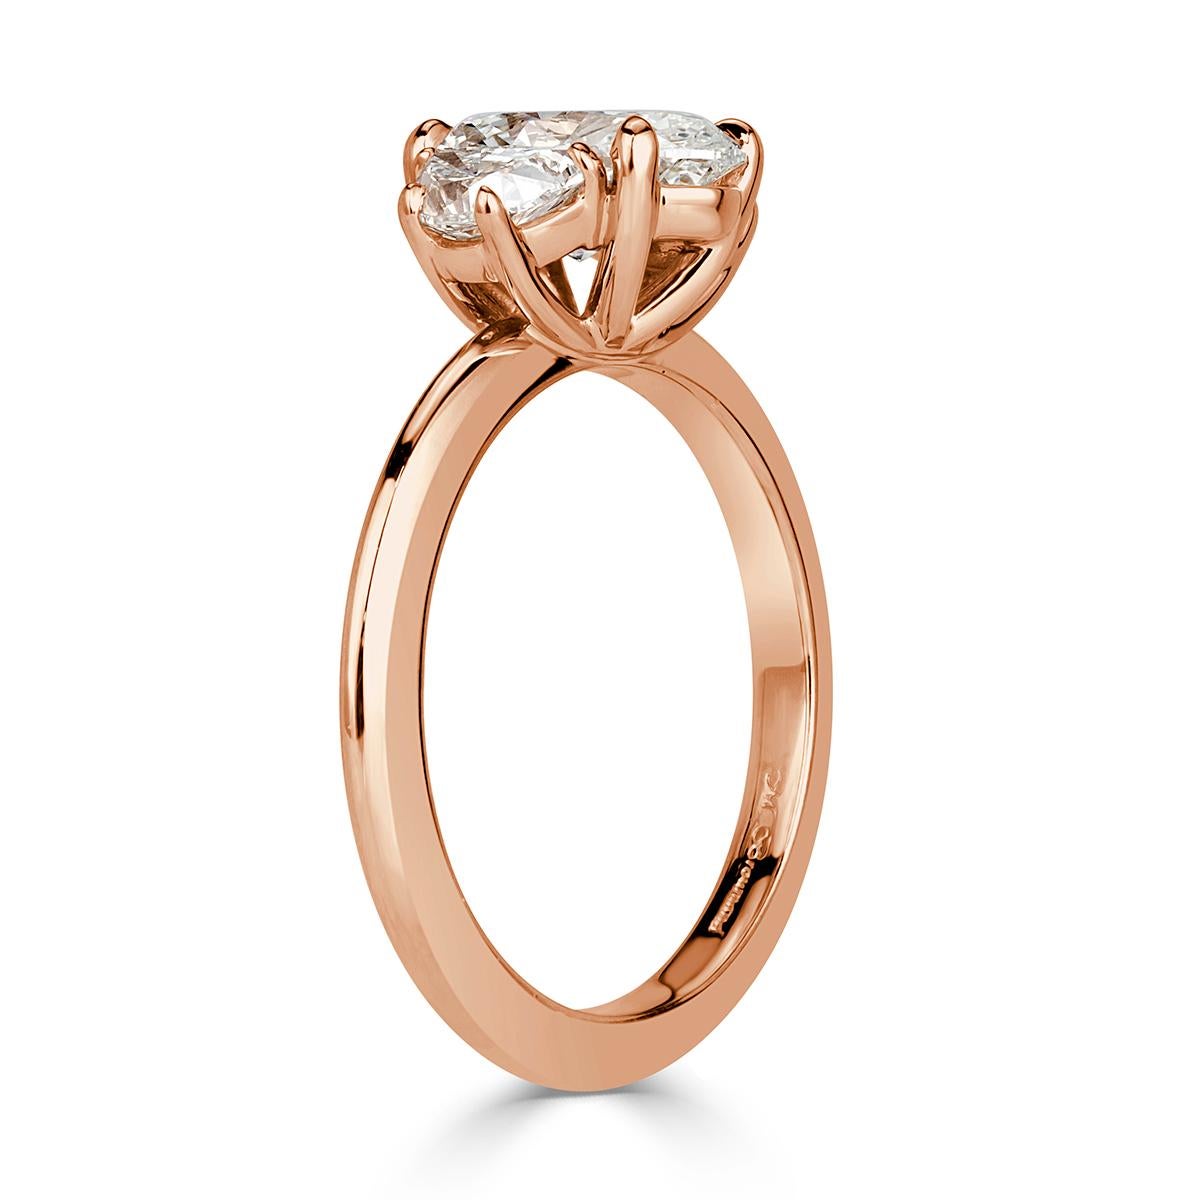 Women's or Men's Mark Broumand 2.09 Carat Oval Cut Diamond Engagement Ring